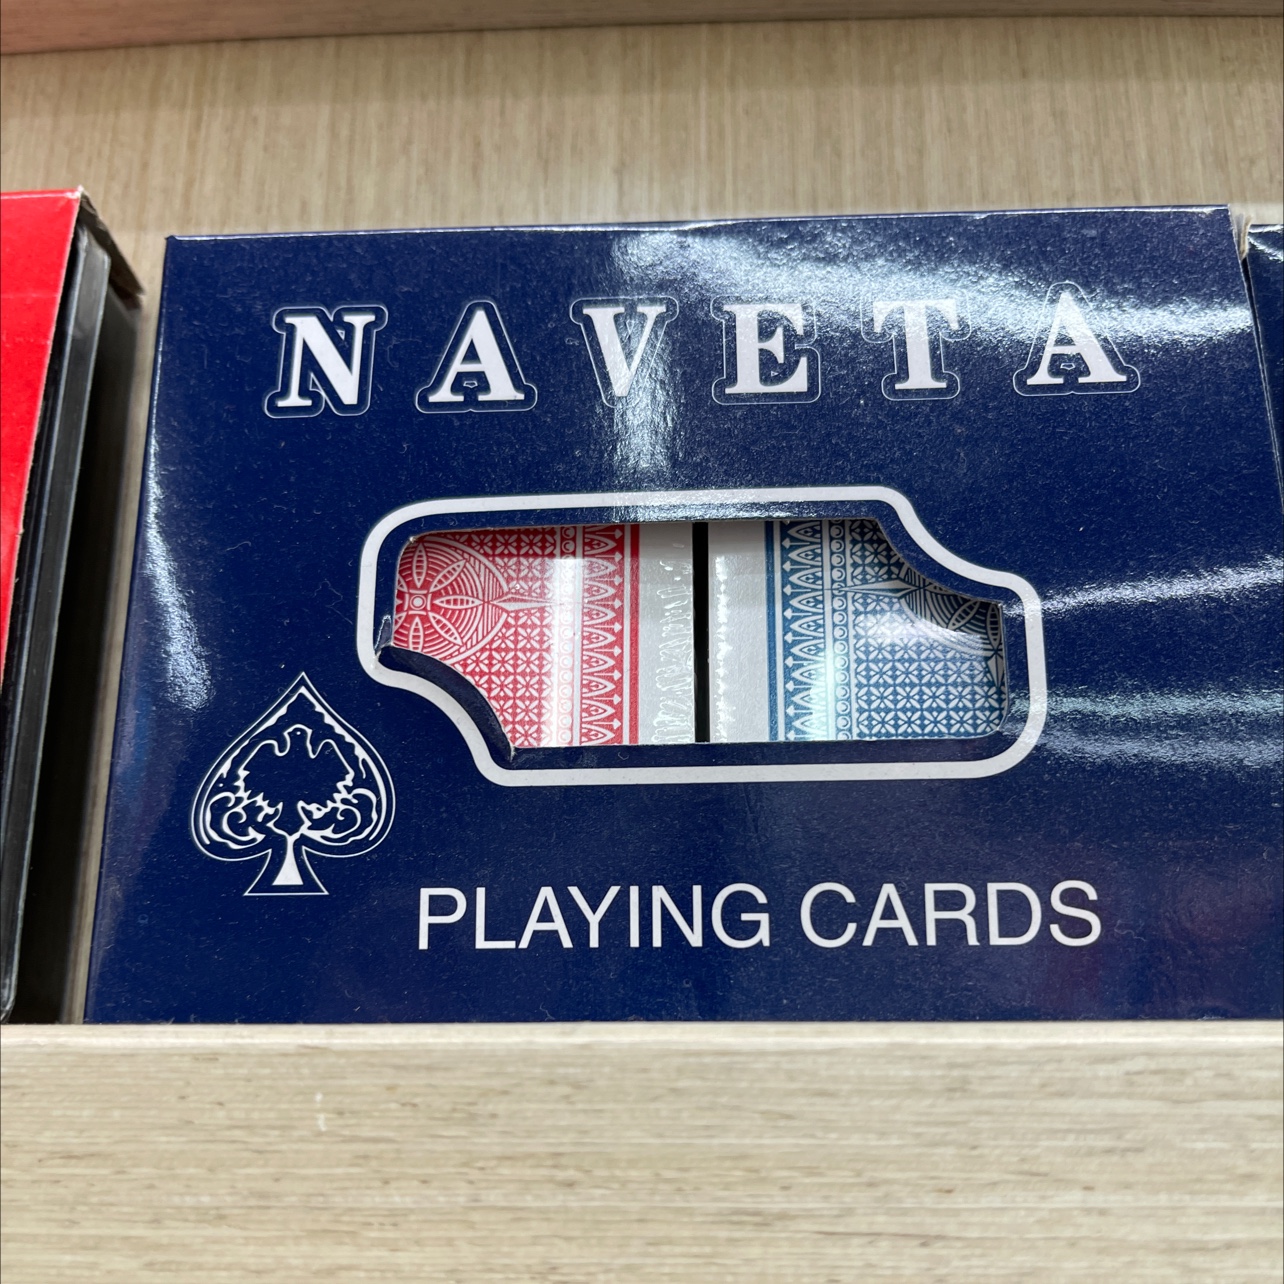 NAVETA 纸双付 290克纸 灰心纸 大字 南美 扑克牌图